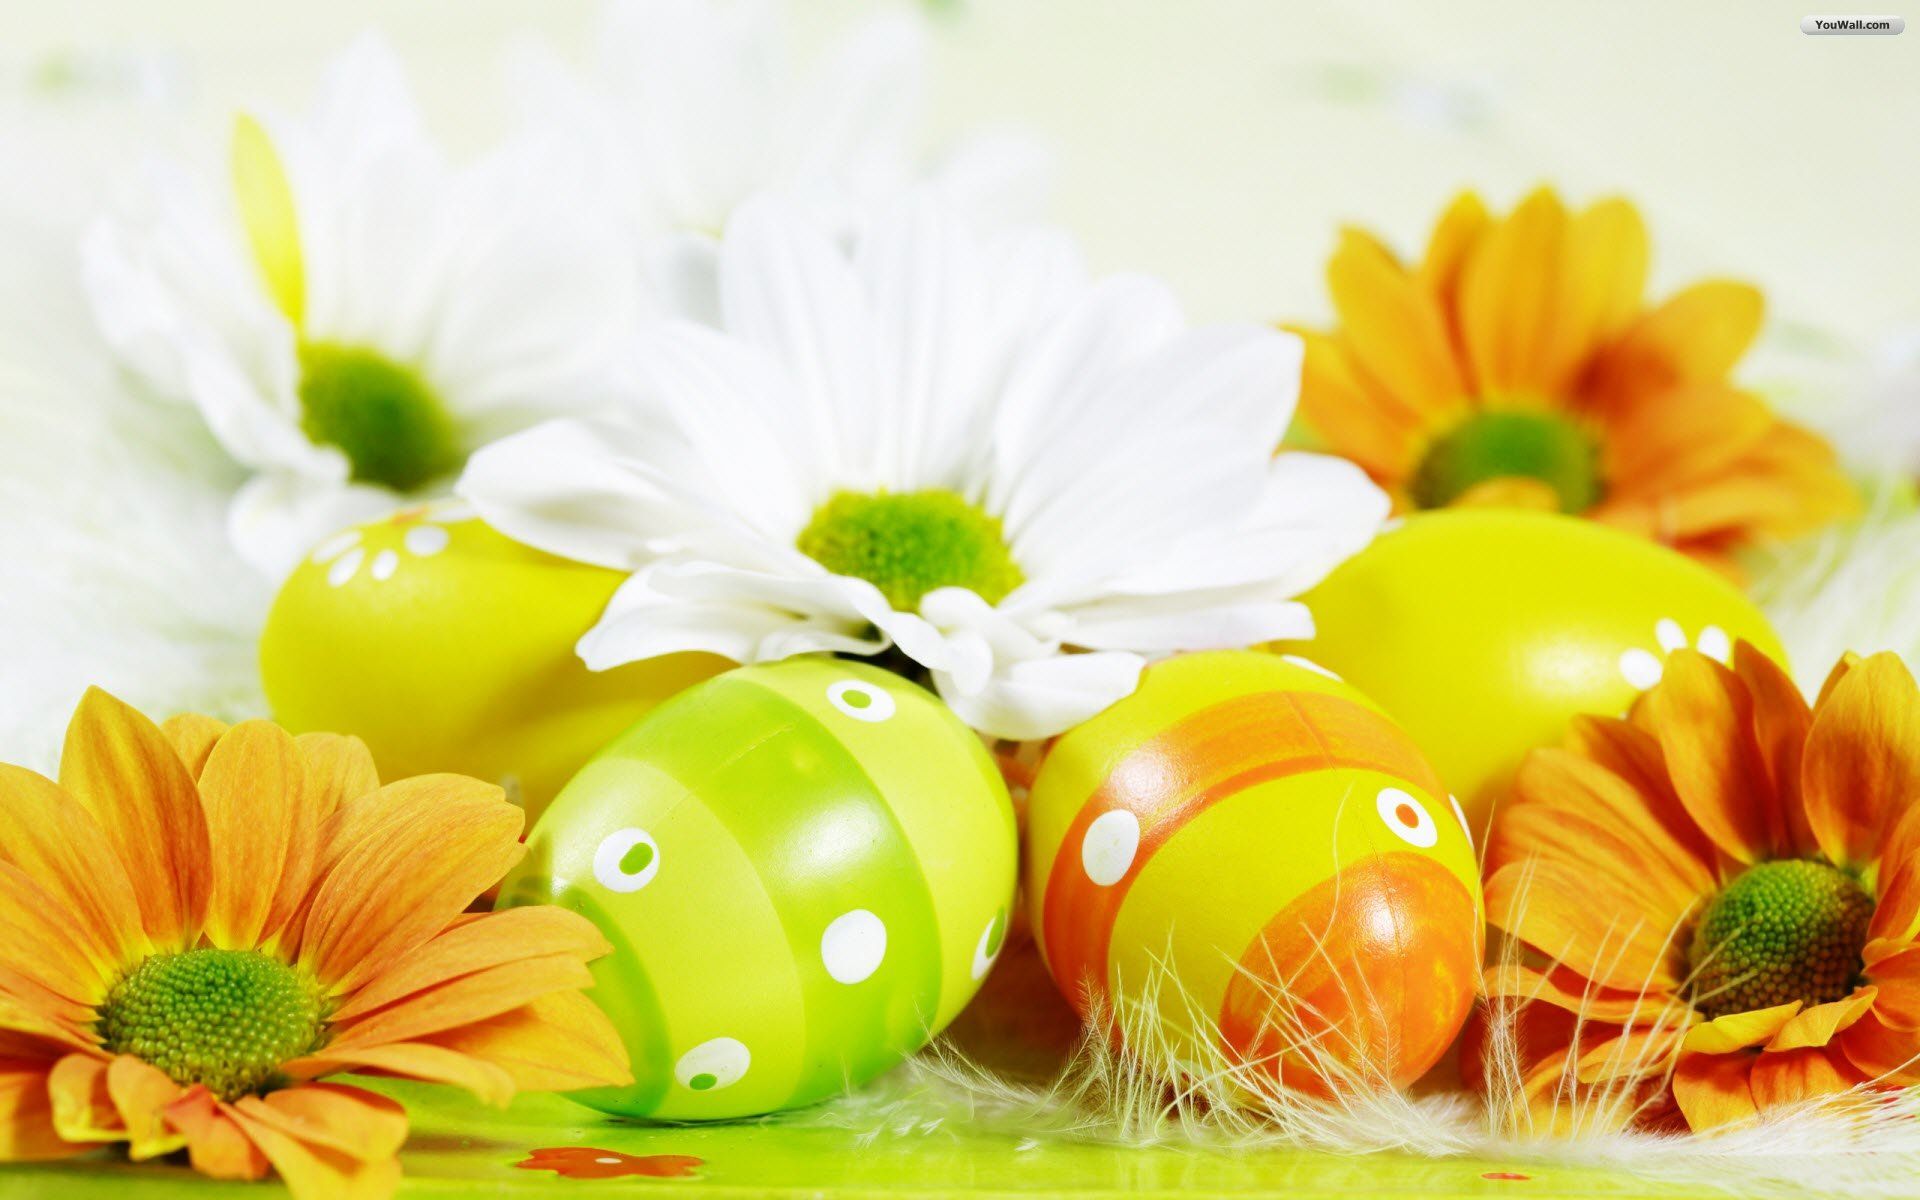 YouWall - Easter Eggs Wallpaper - wallpaper,wallpapers,free